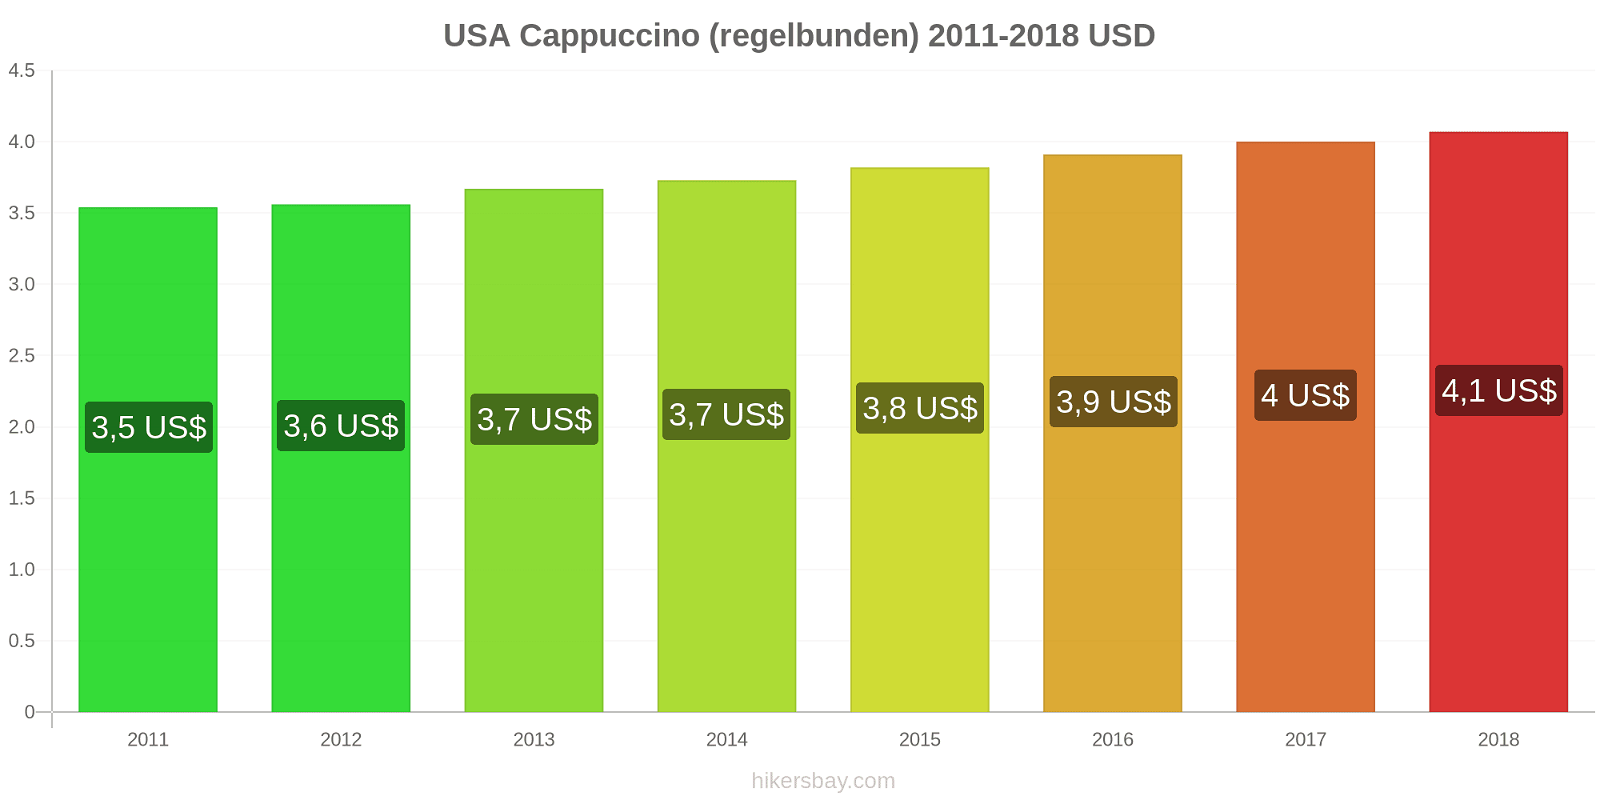 USA prisändringar Cappuccino hikersbay.com